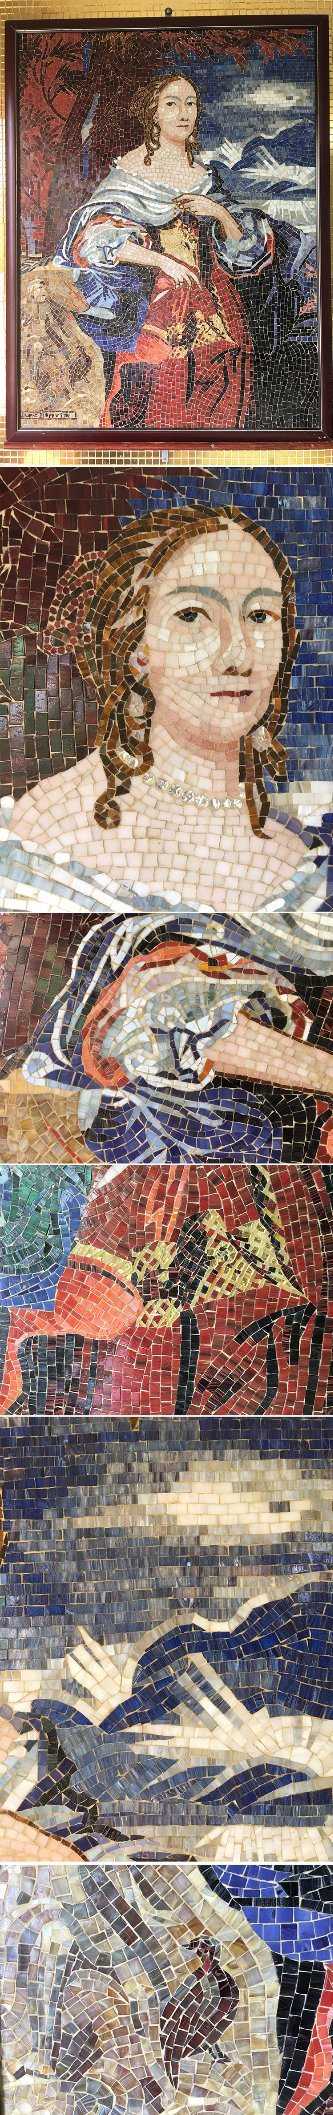 Mediterranean Style Classic Exquisitely Made Church Art Photo Mosaic